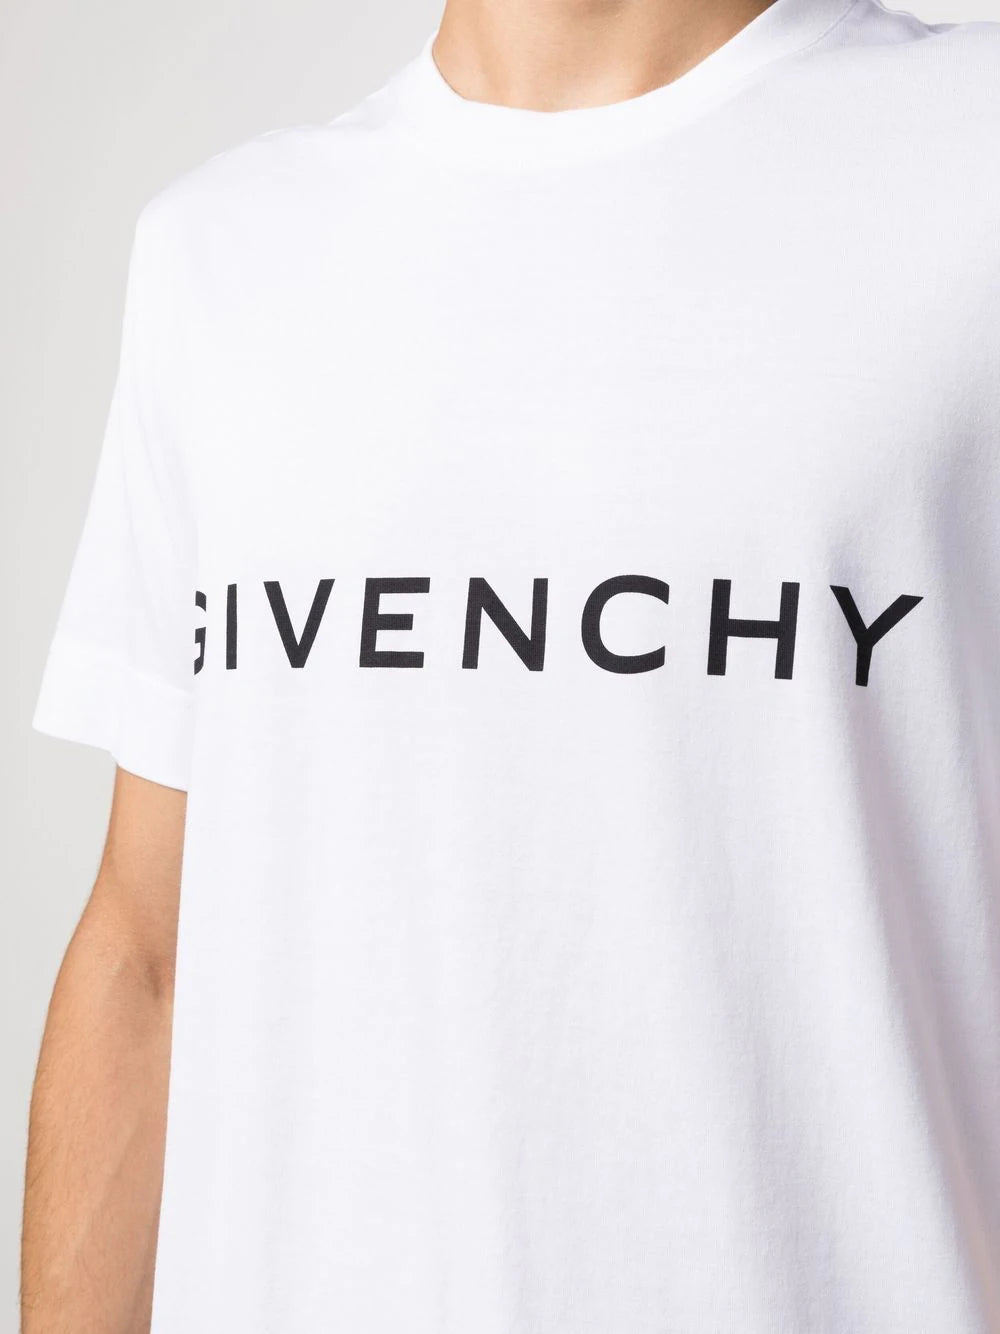 Givenchy logo-print cotton T-shirt